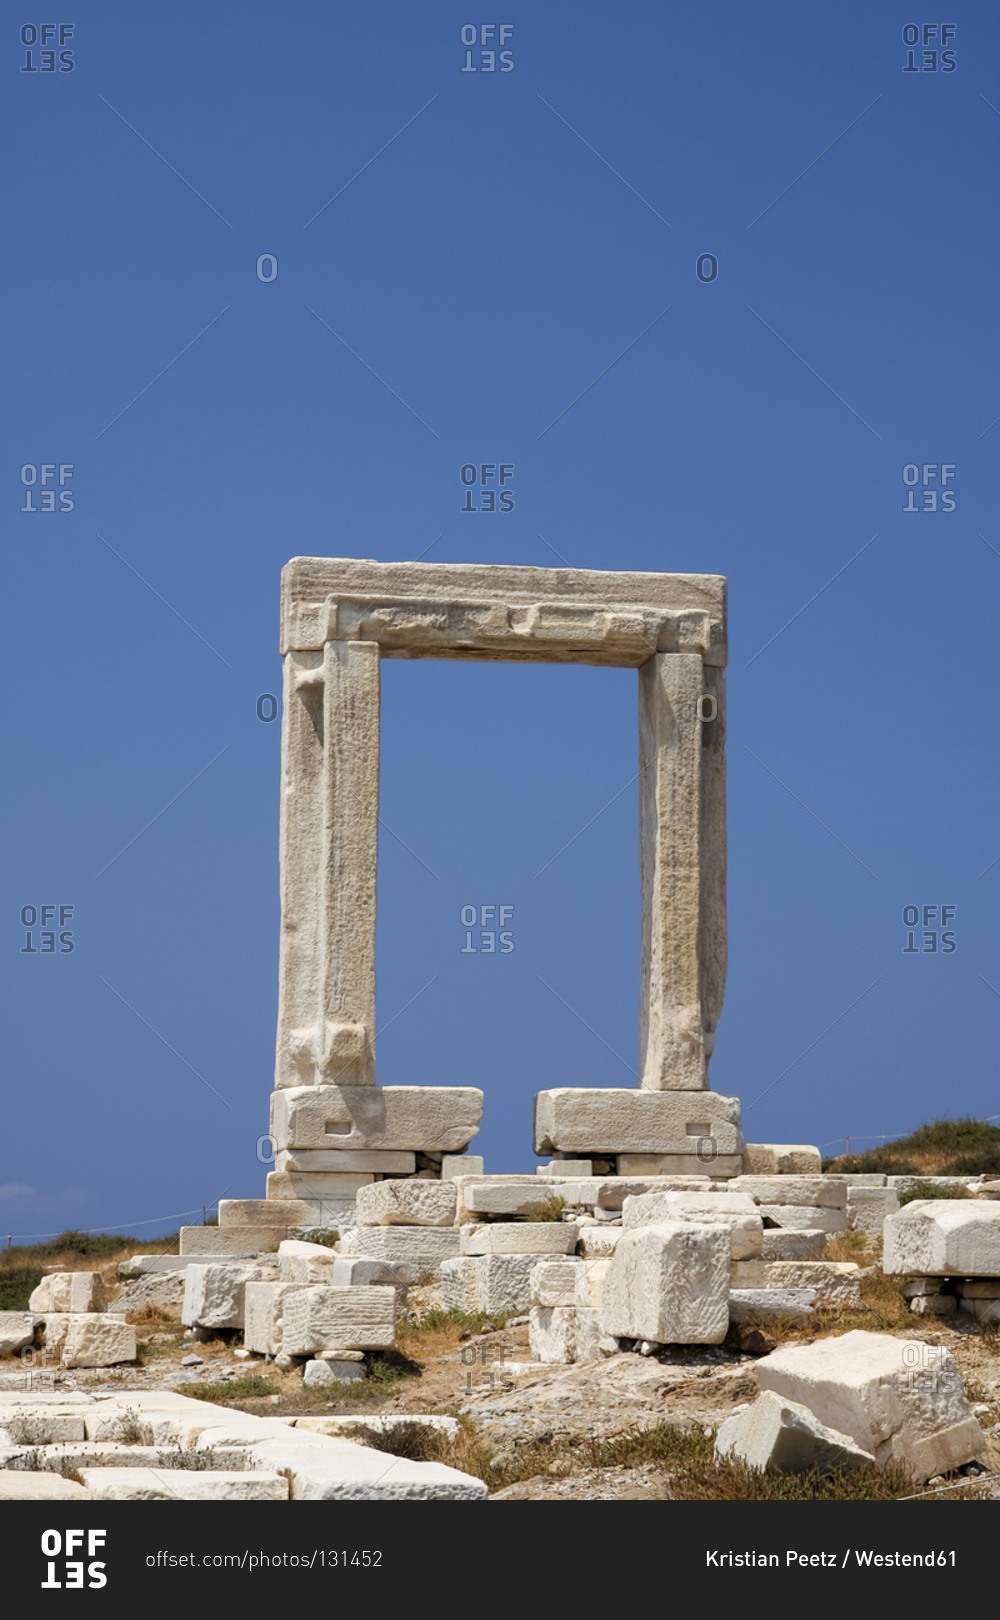 Gate to the temple of Apollo